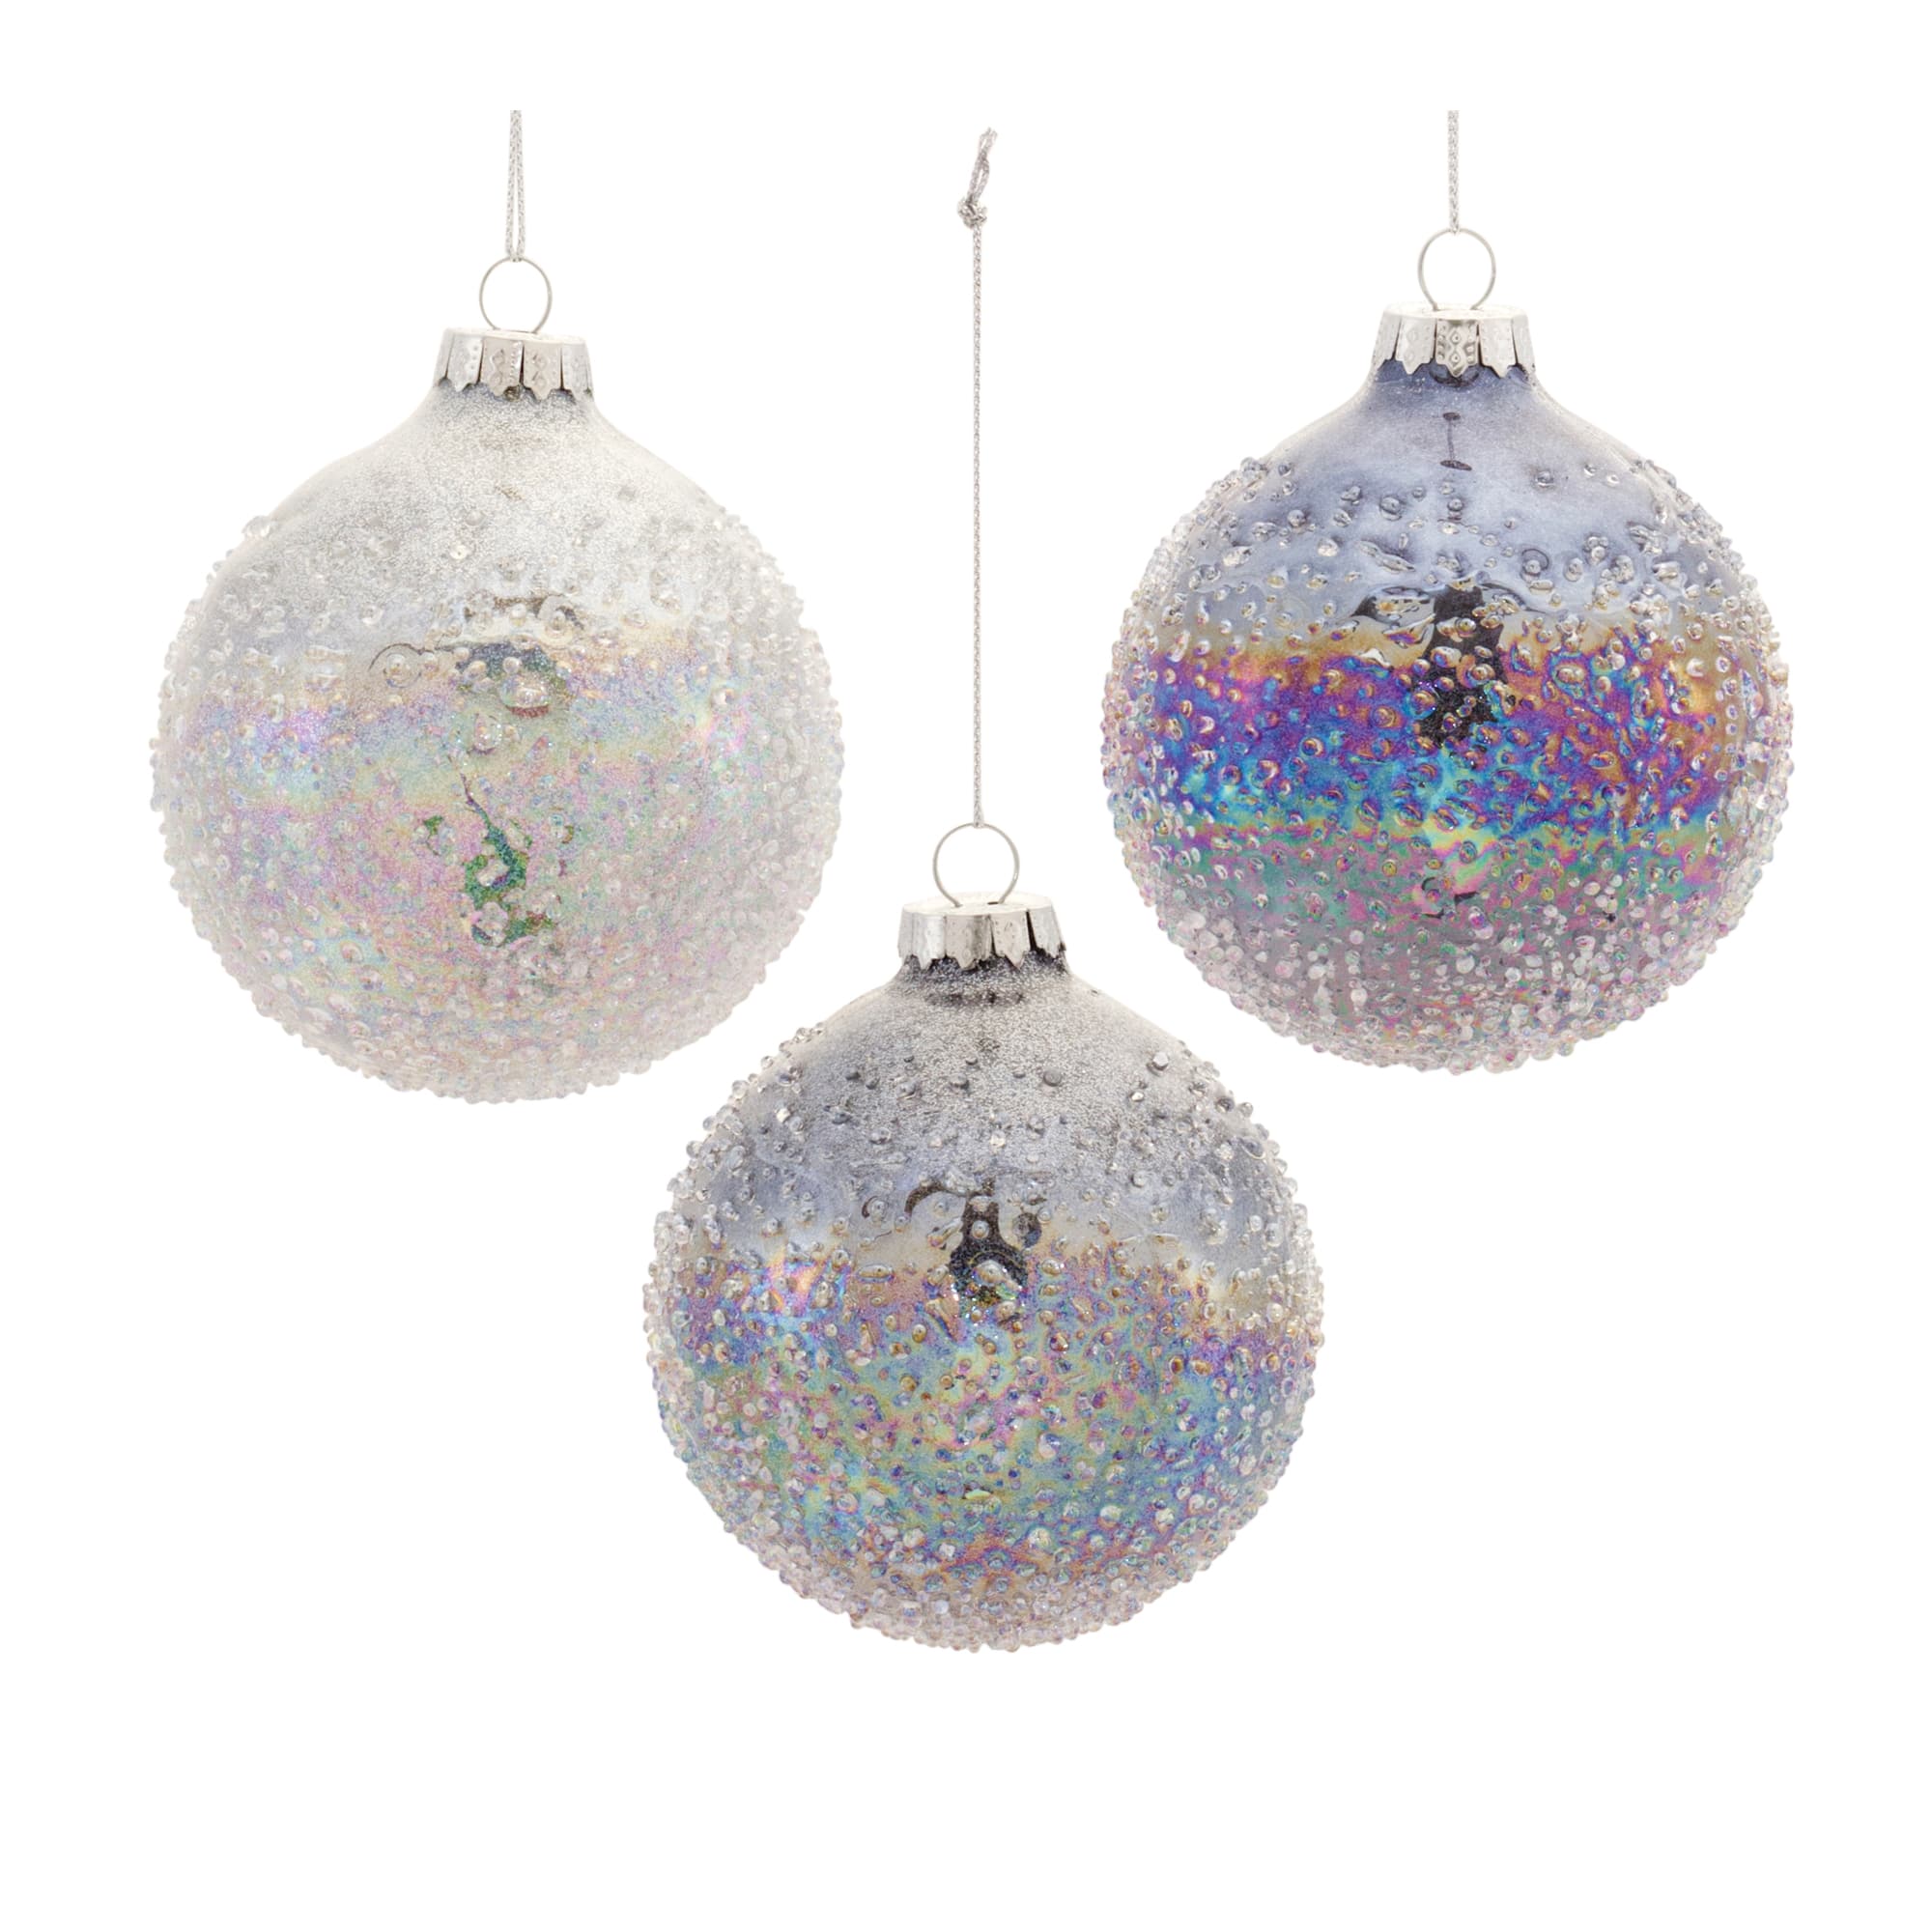 12ct. Textured Iridescent Glass Ball Ornaments